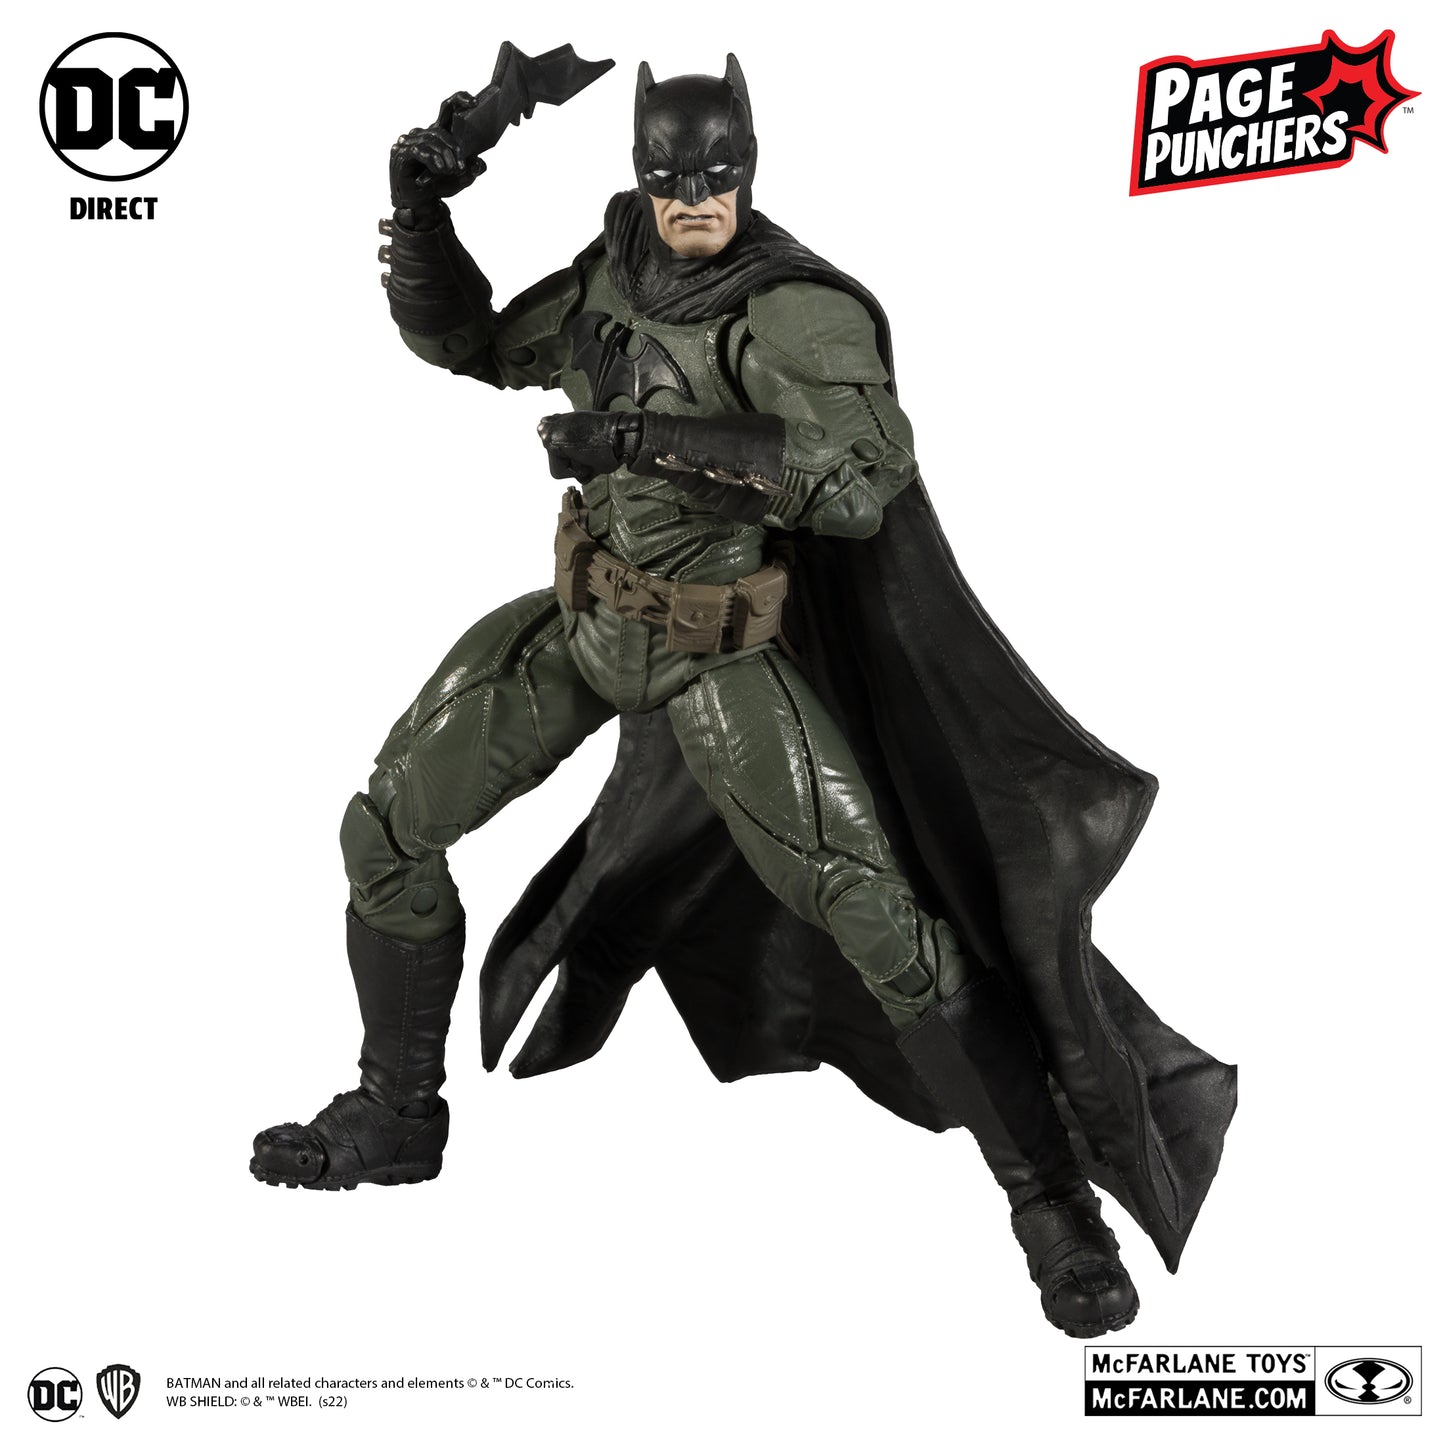 McFarlane Toys DC Direct Page Punchers Black Adam Comic - Batman